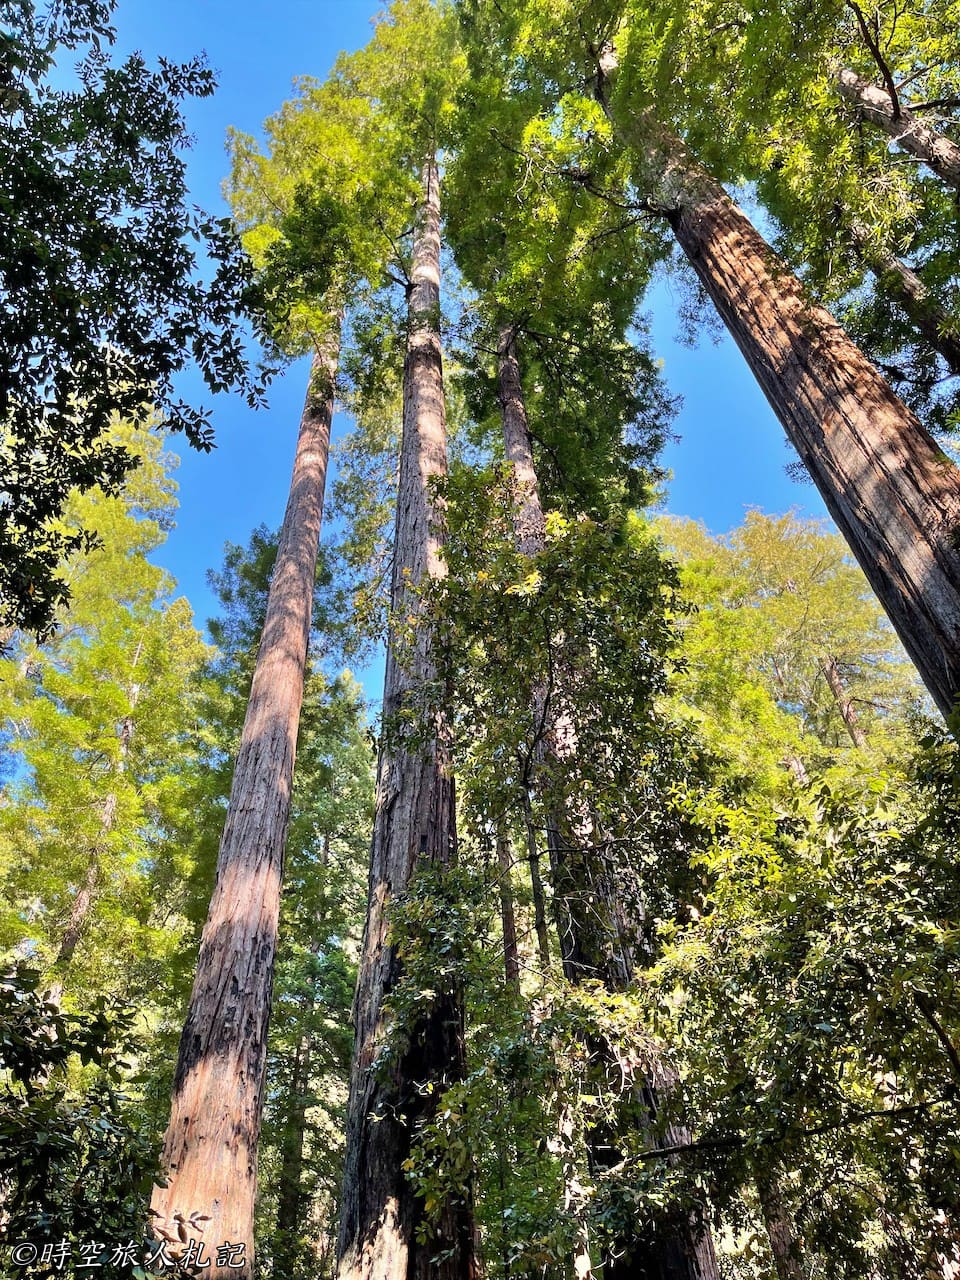 Portola redwood state park 14